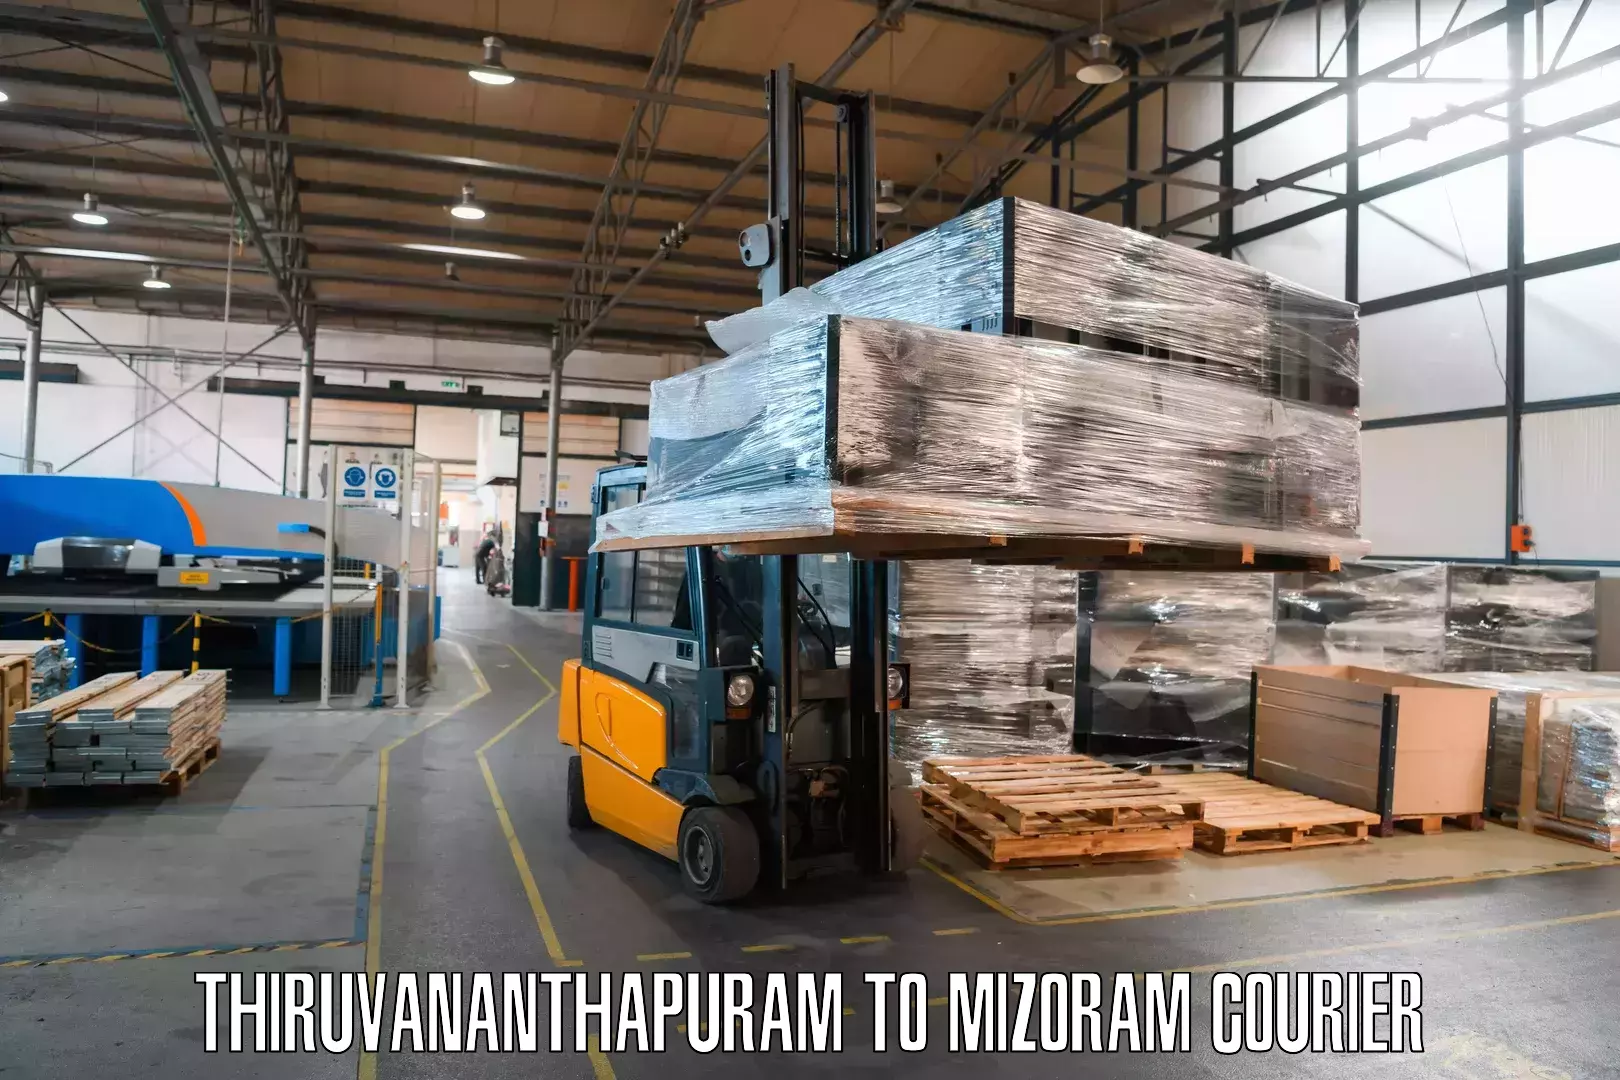 Tech-enabled shipping Thiruvananthapuram to Aizawl